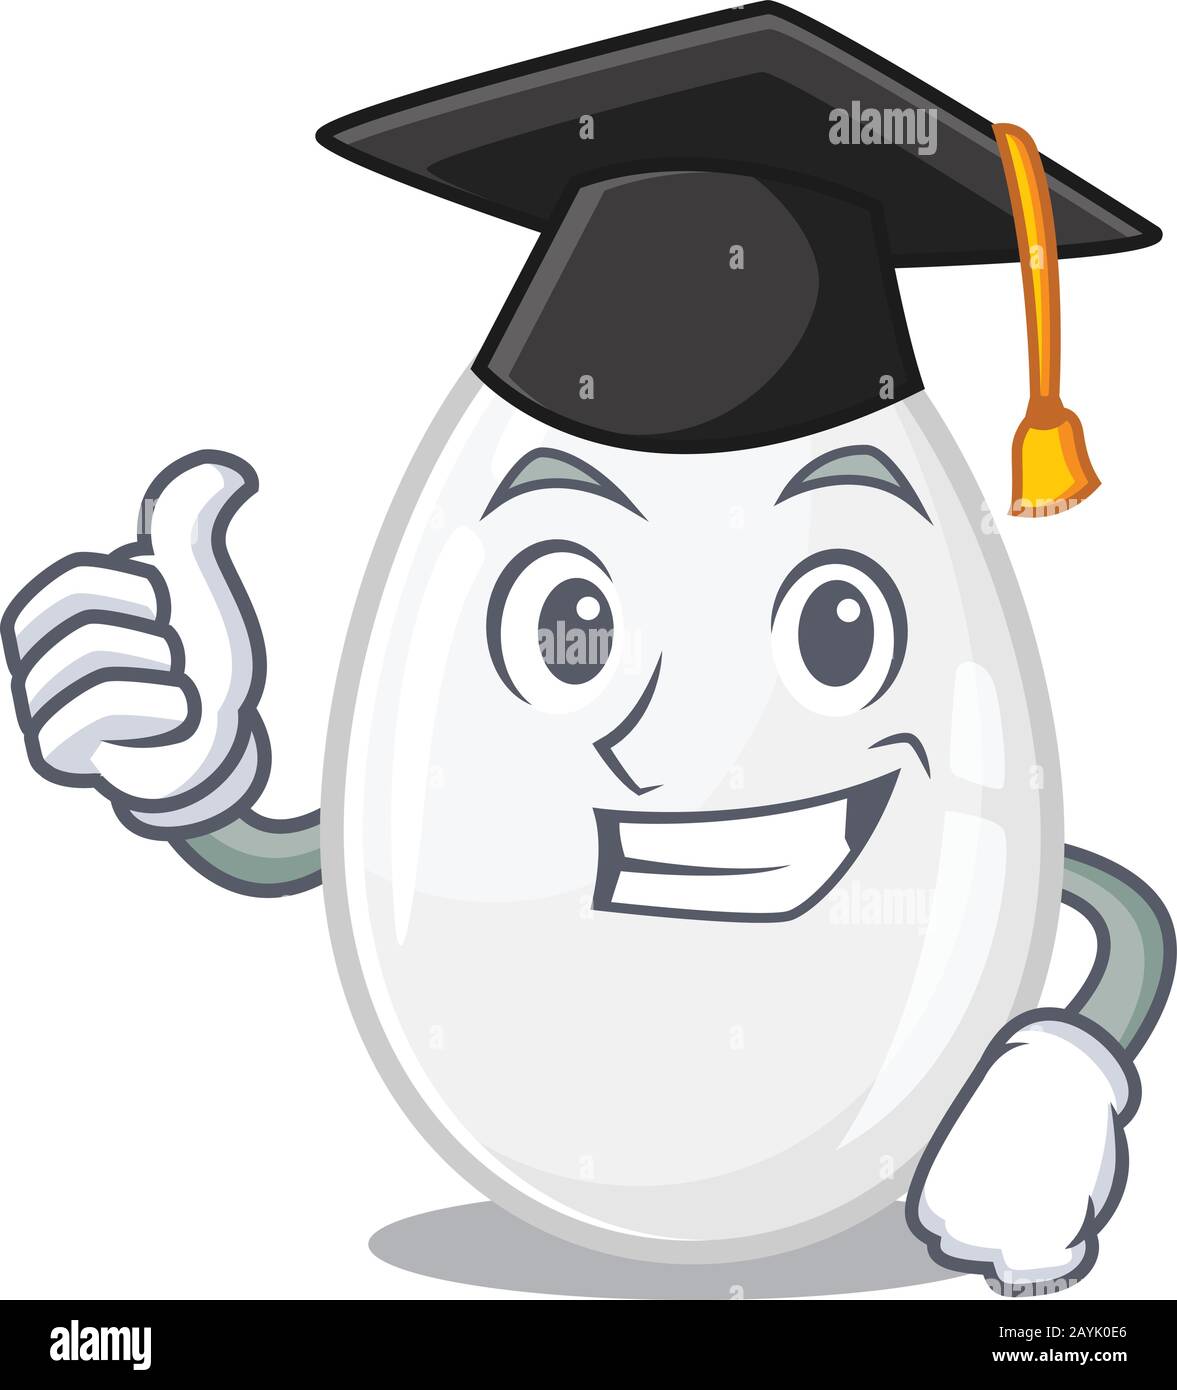 https://c8.alamy.com/comp/2AYK0E6/happy-and-proud-of-white-egg-wearing-a-black-graduation-hat-2AYK0E6.jpg